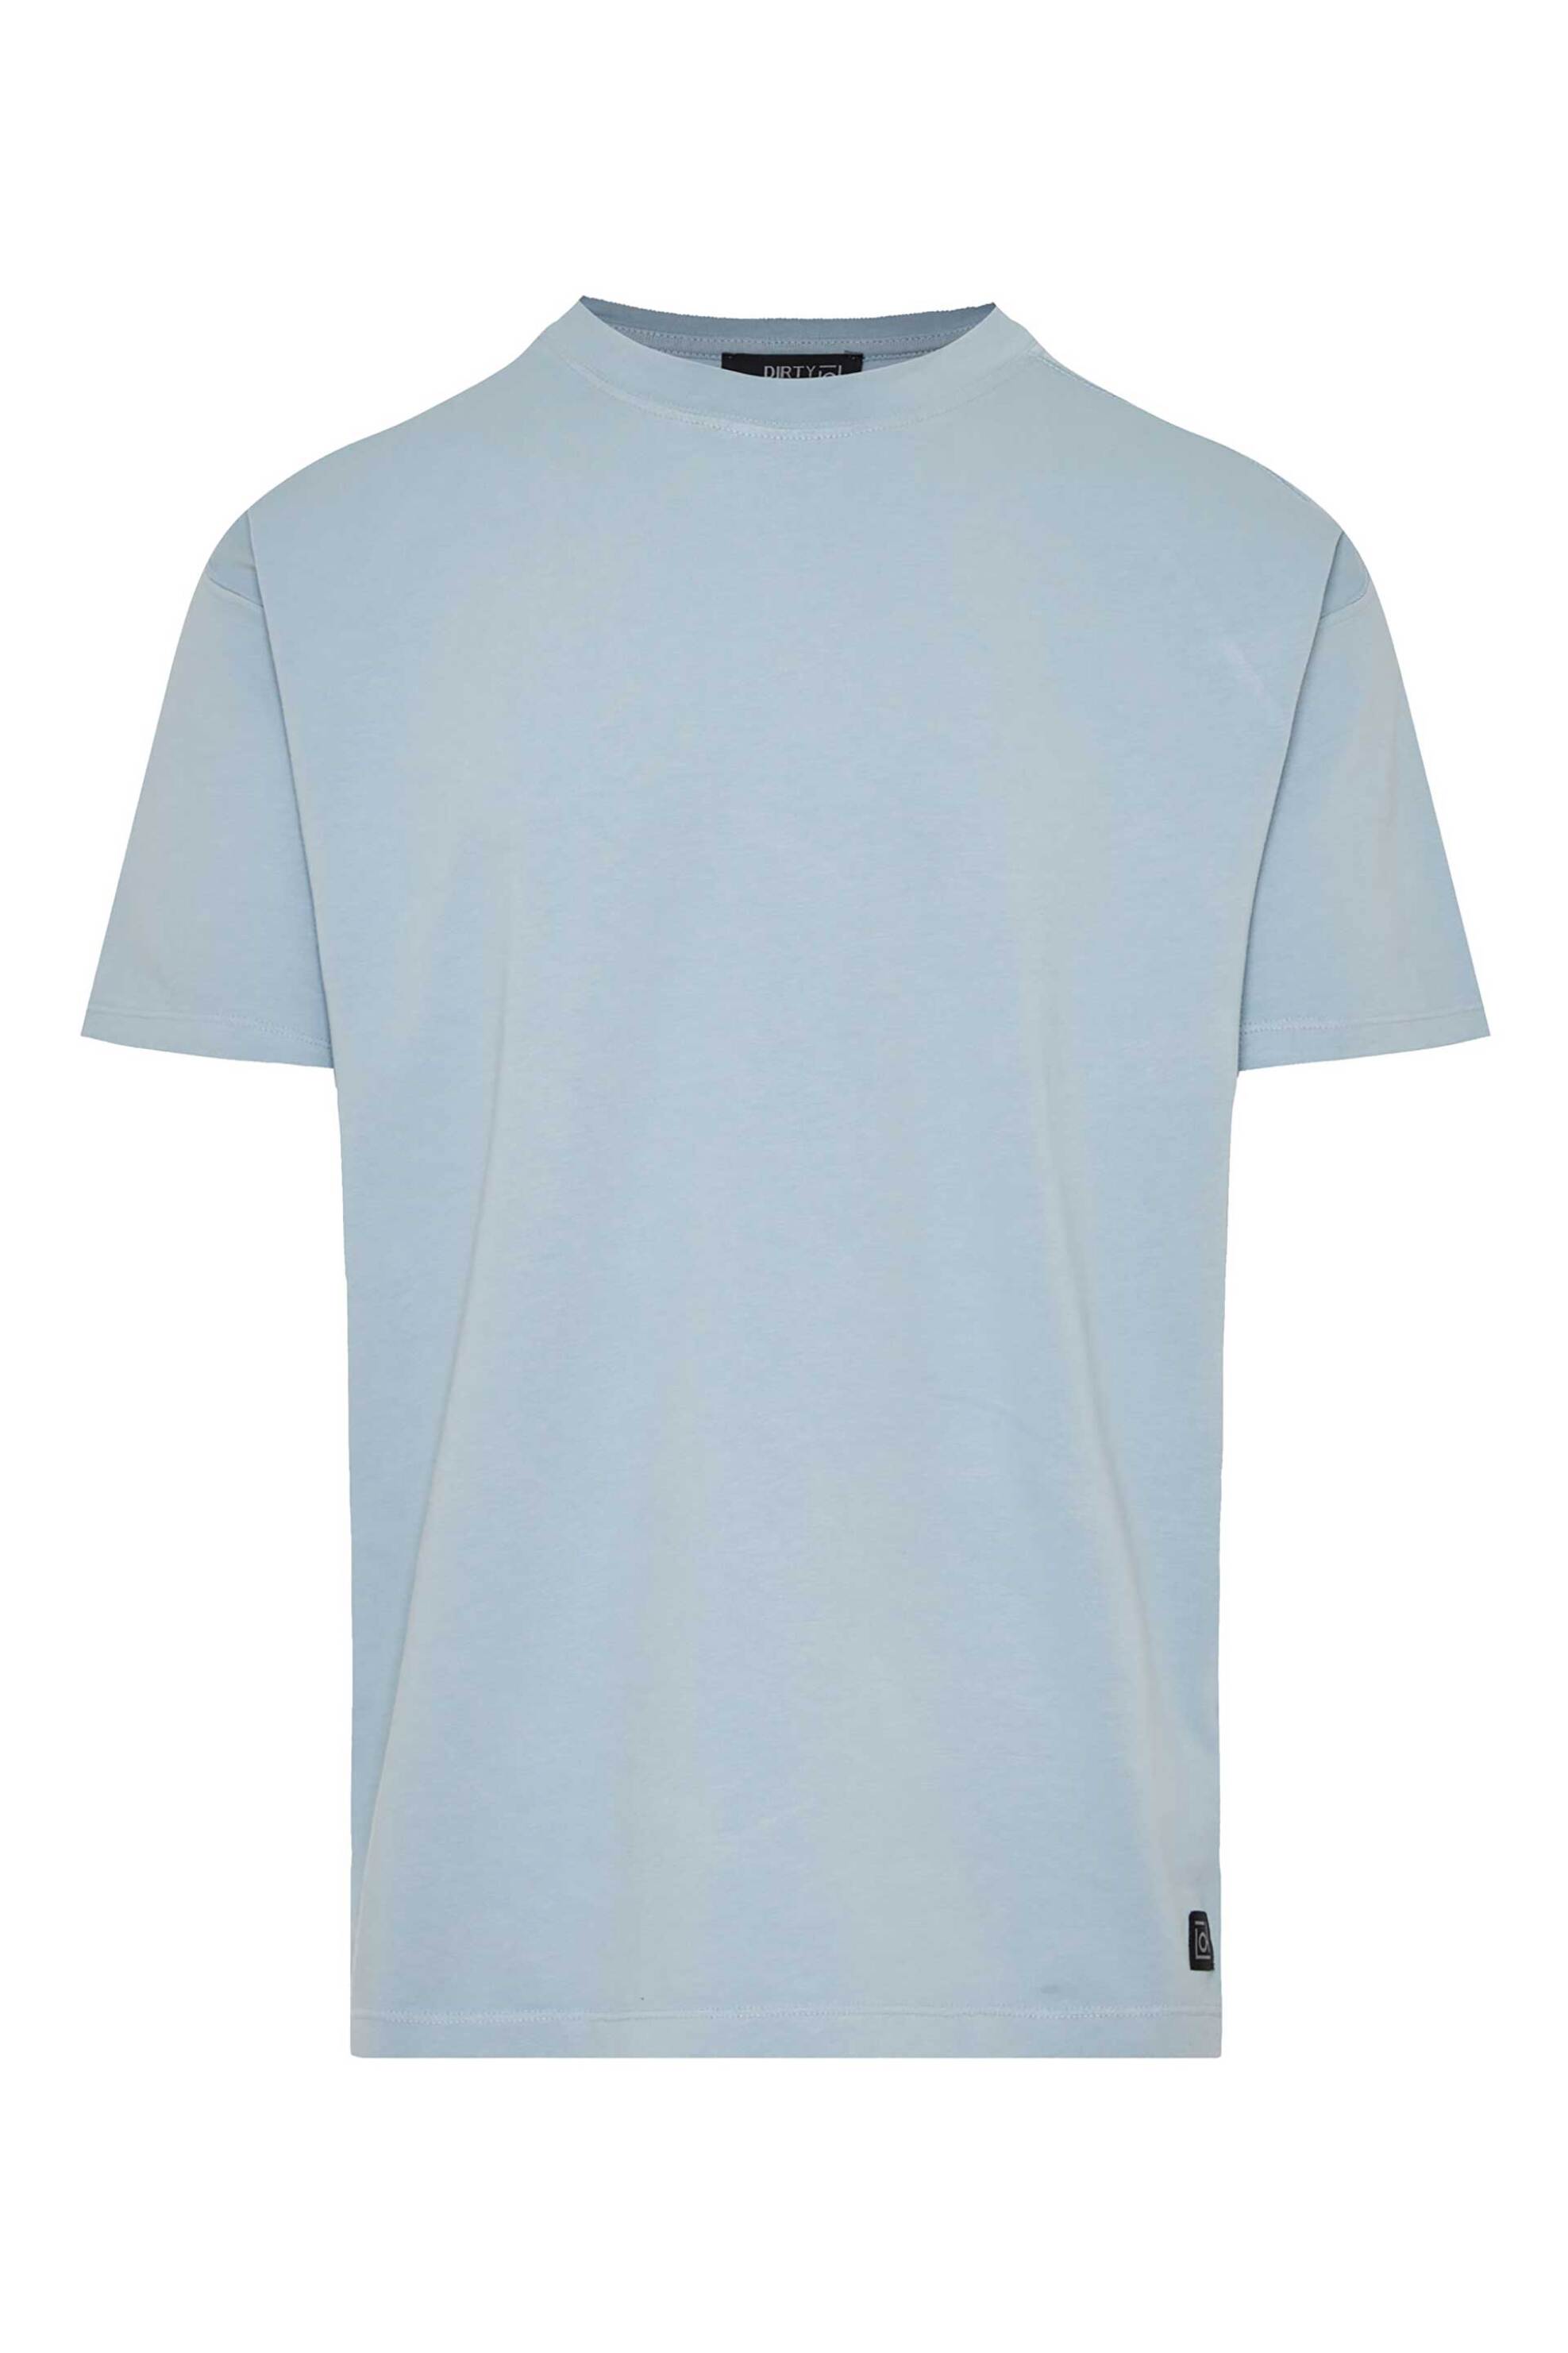 Dirty Laundry ανδρικό T-shirt reglan Regular Fit - DLMT000569 Μπλε Ανοιχτό